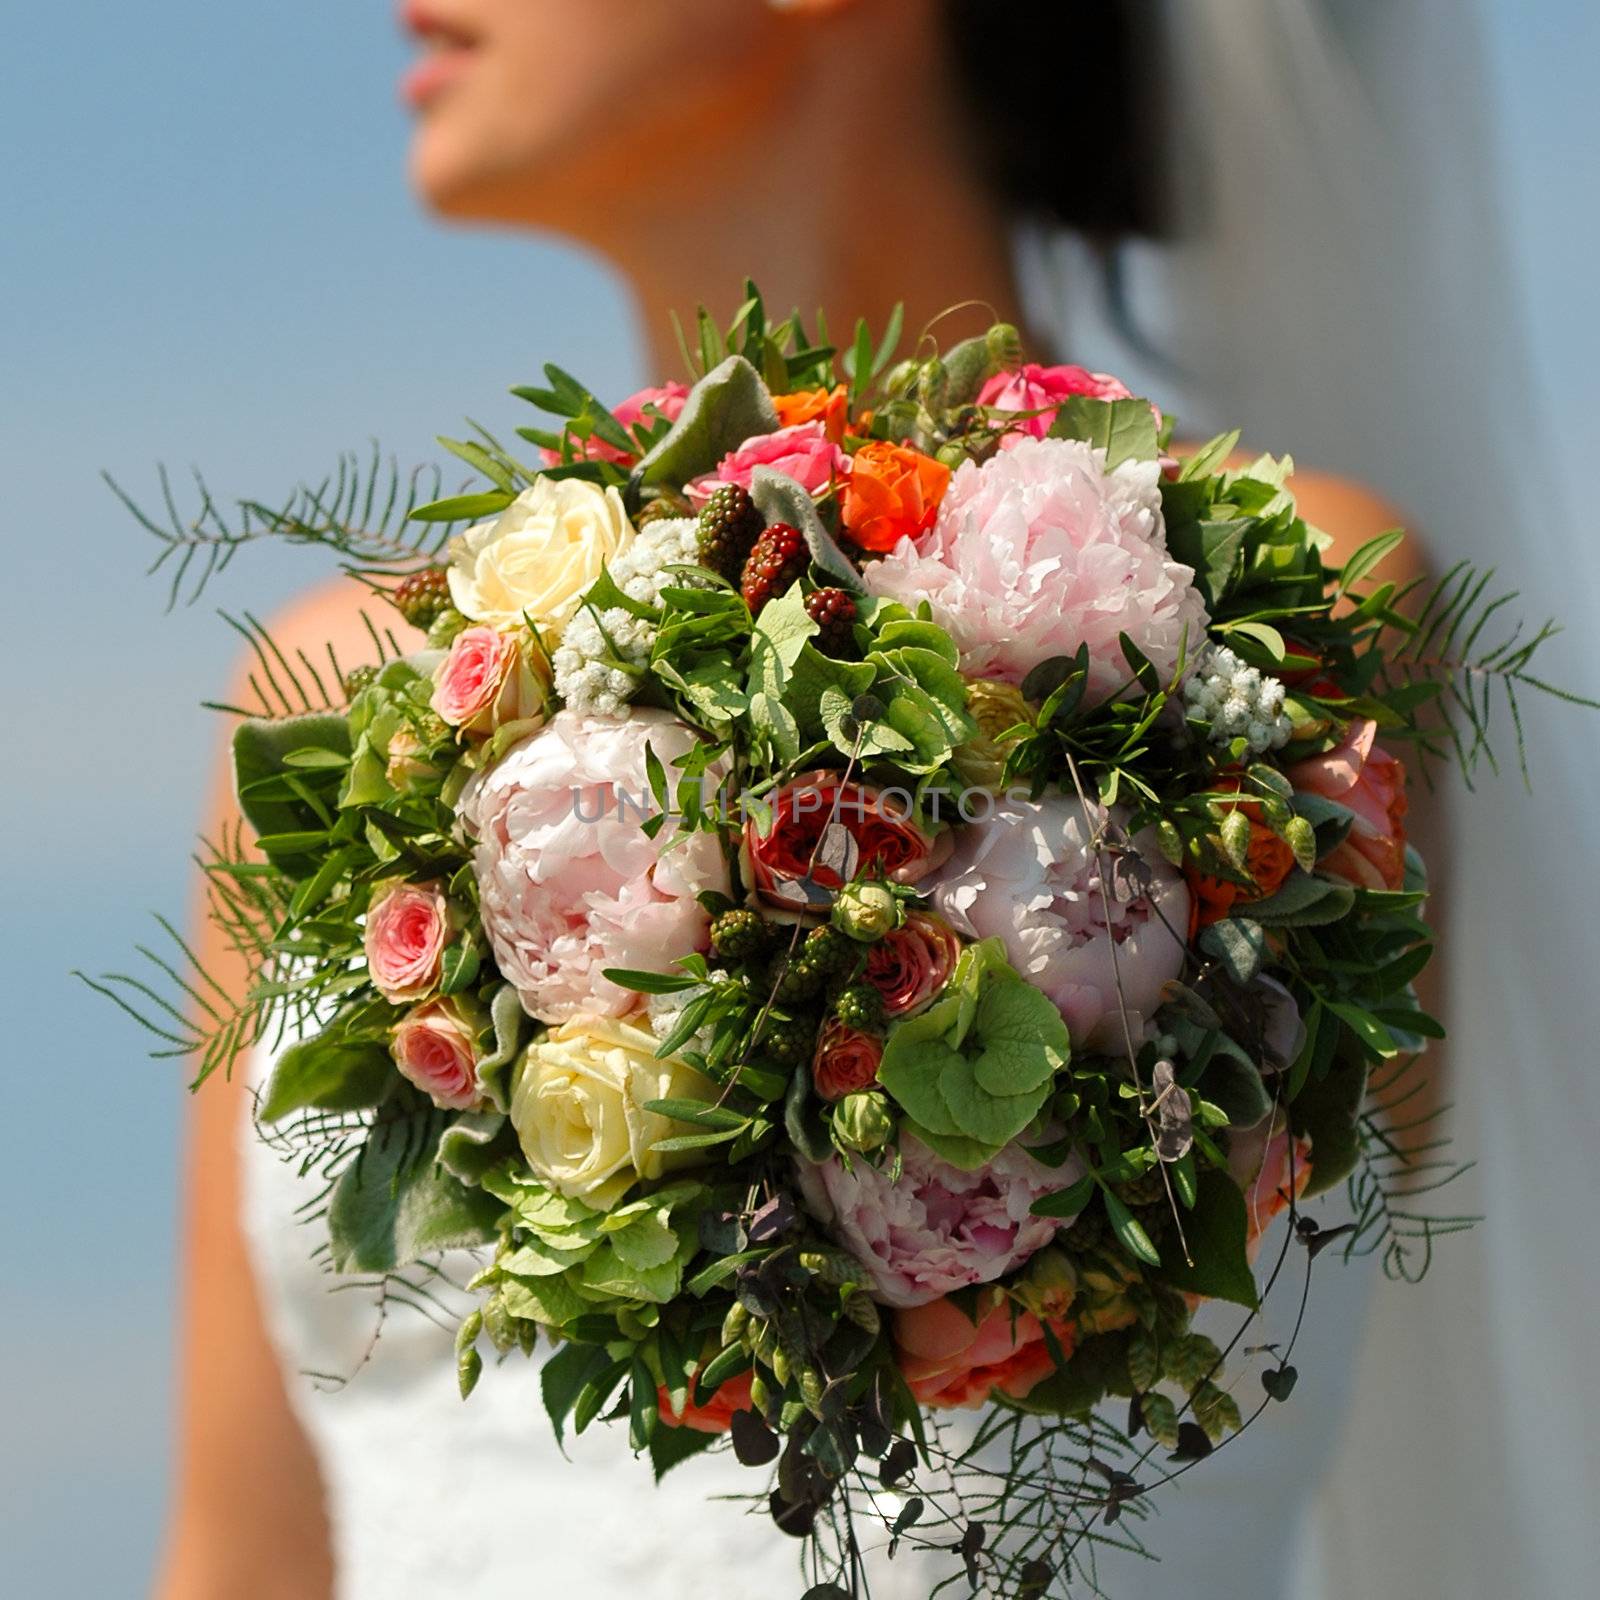 Bride holding flower boquet. The flower boquet is in focus and the bride is in blur.